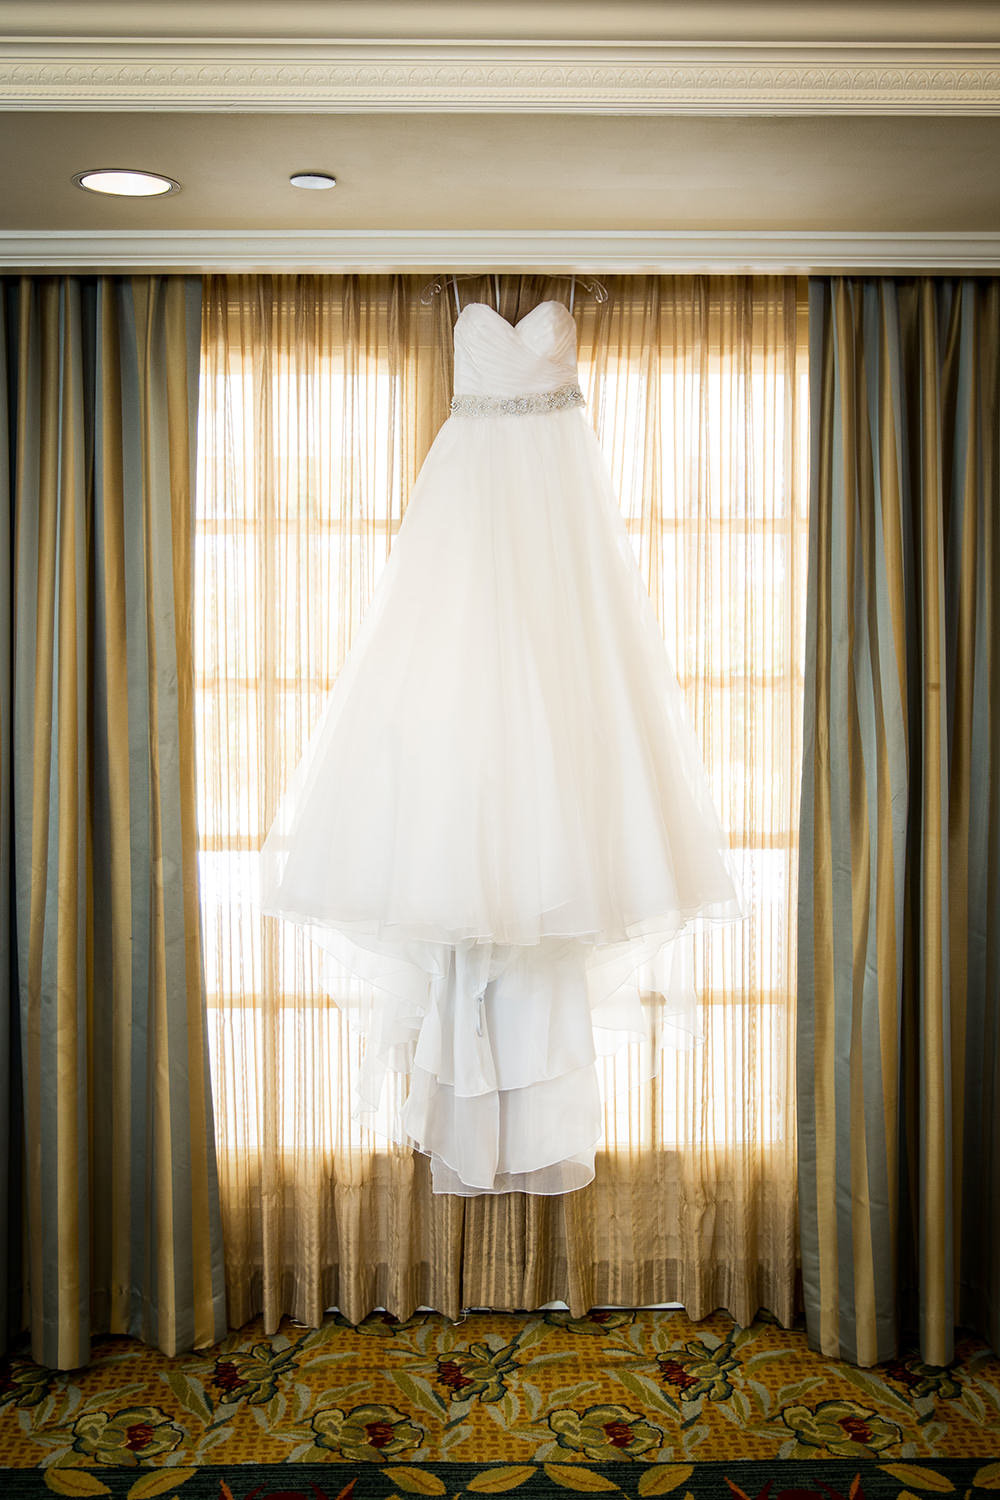 Wedding gown in the window detail shot